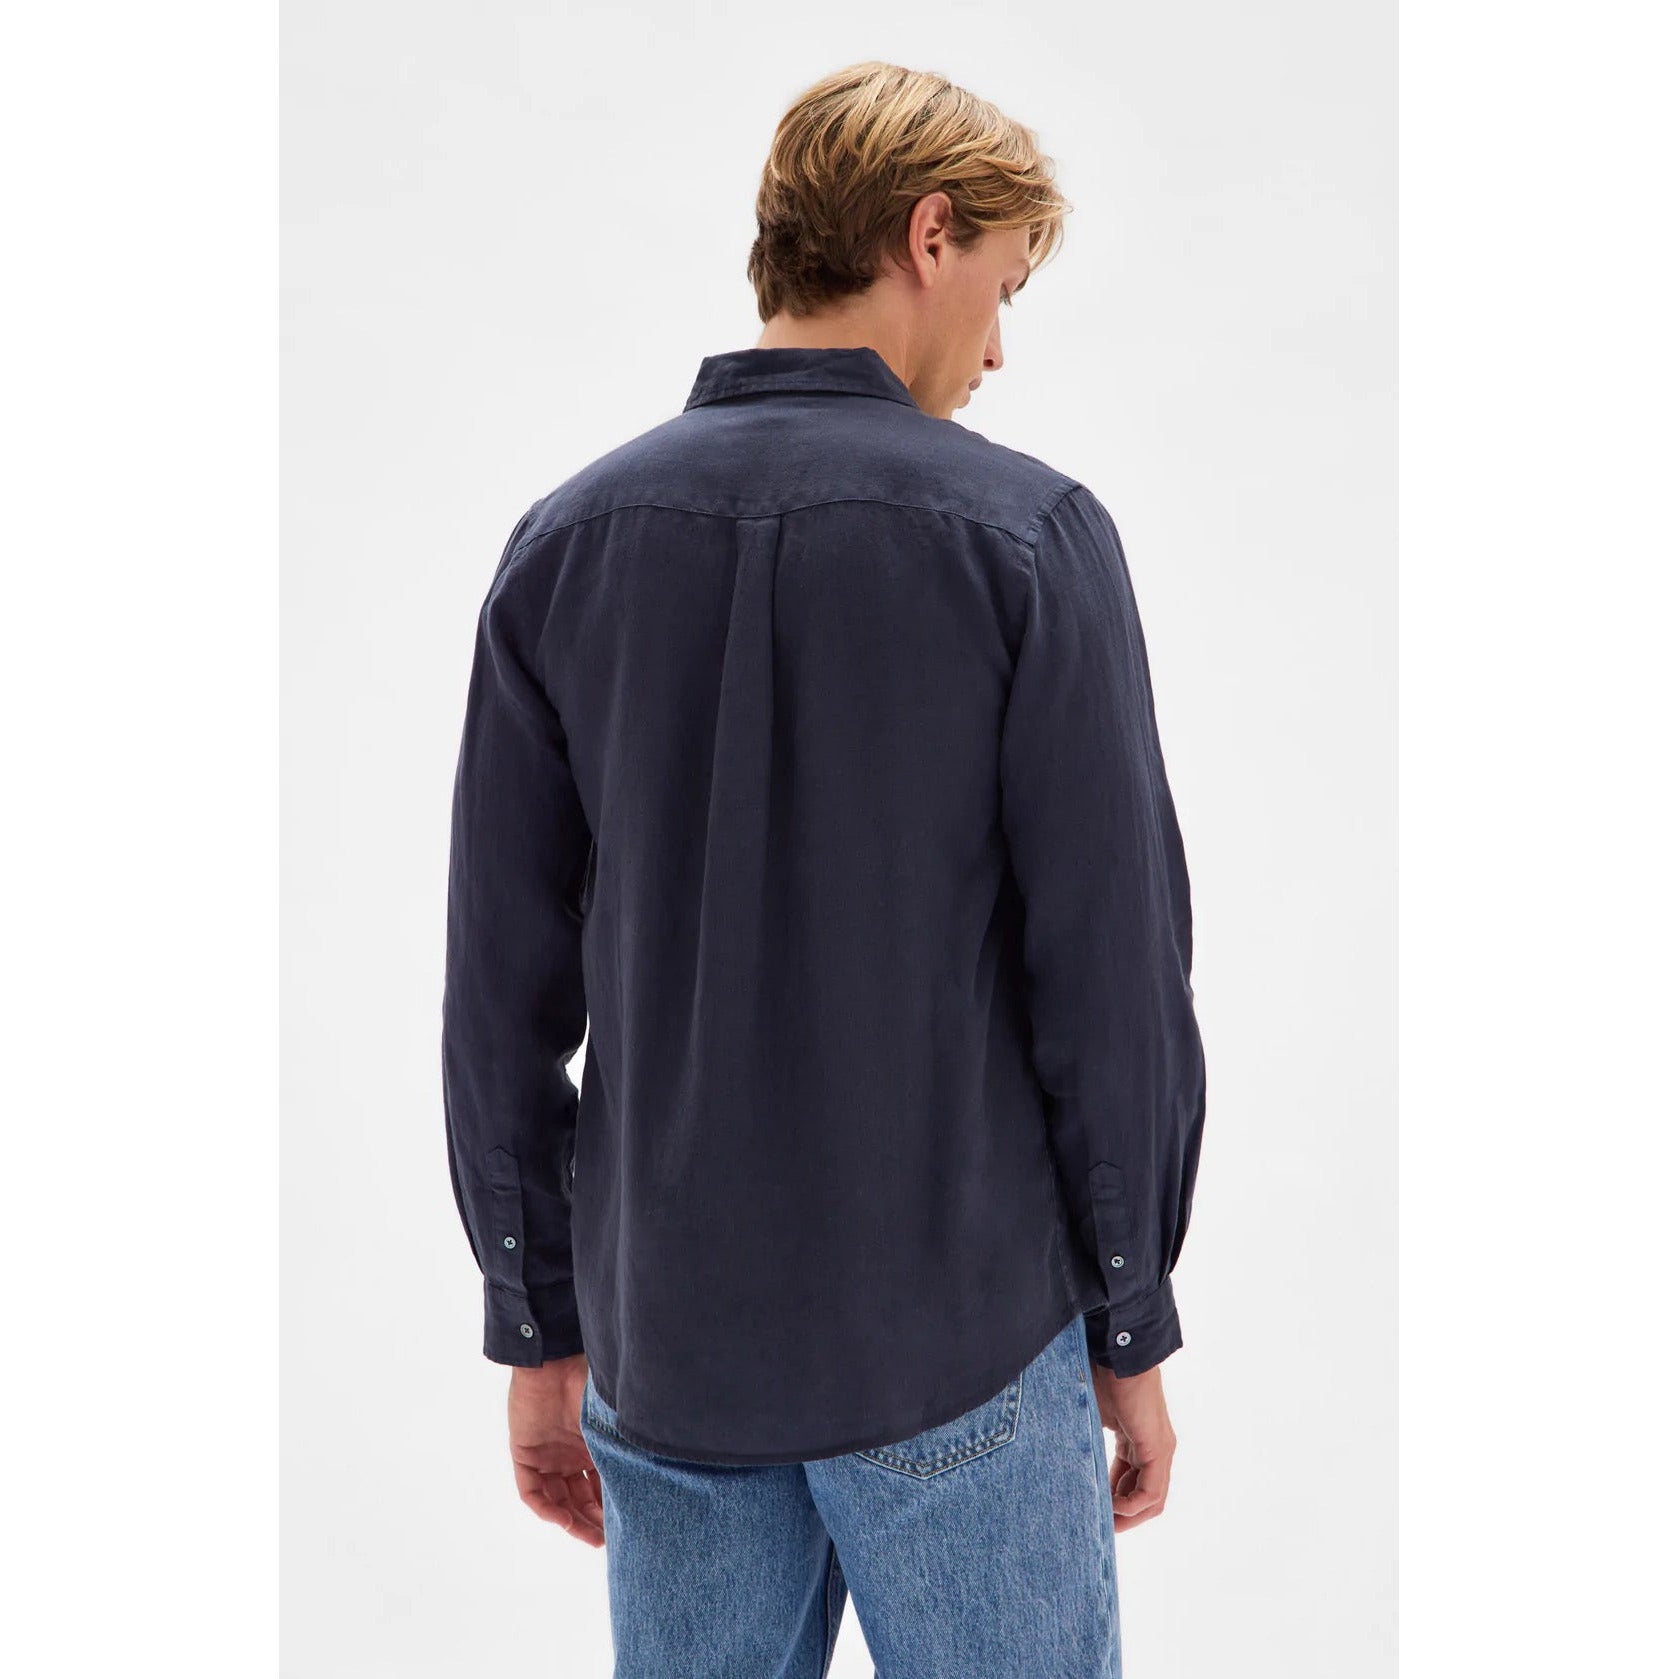 Assembly Label Men's Casual Long Sleeve Linen Shirt